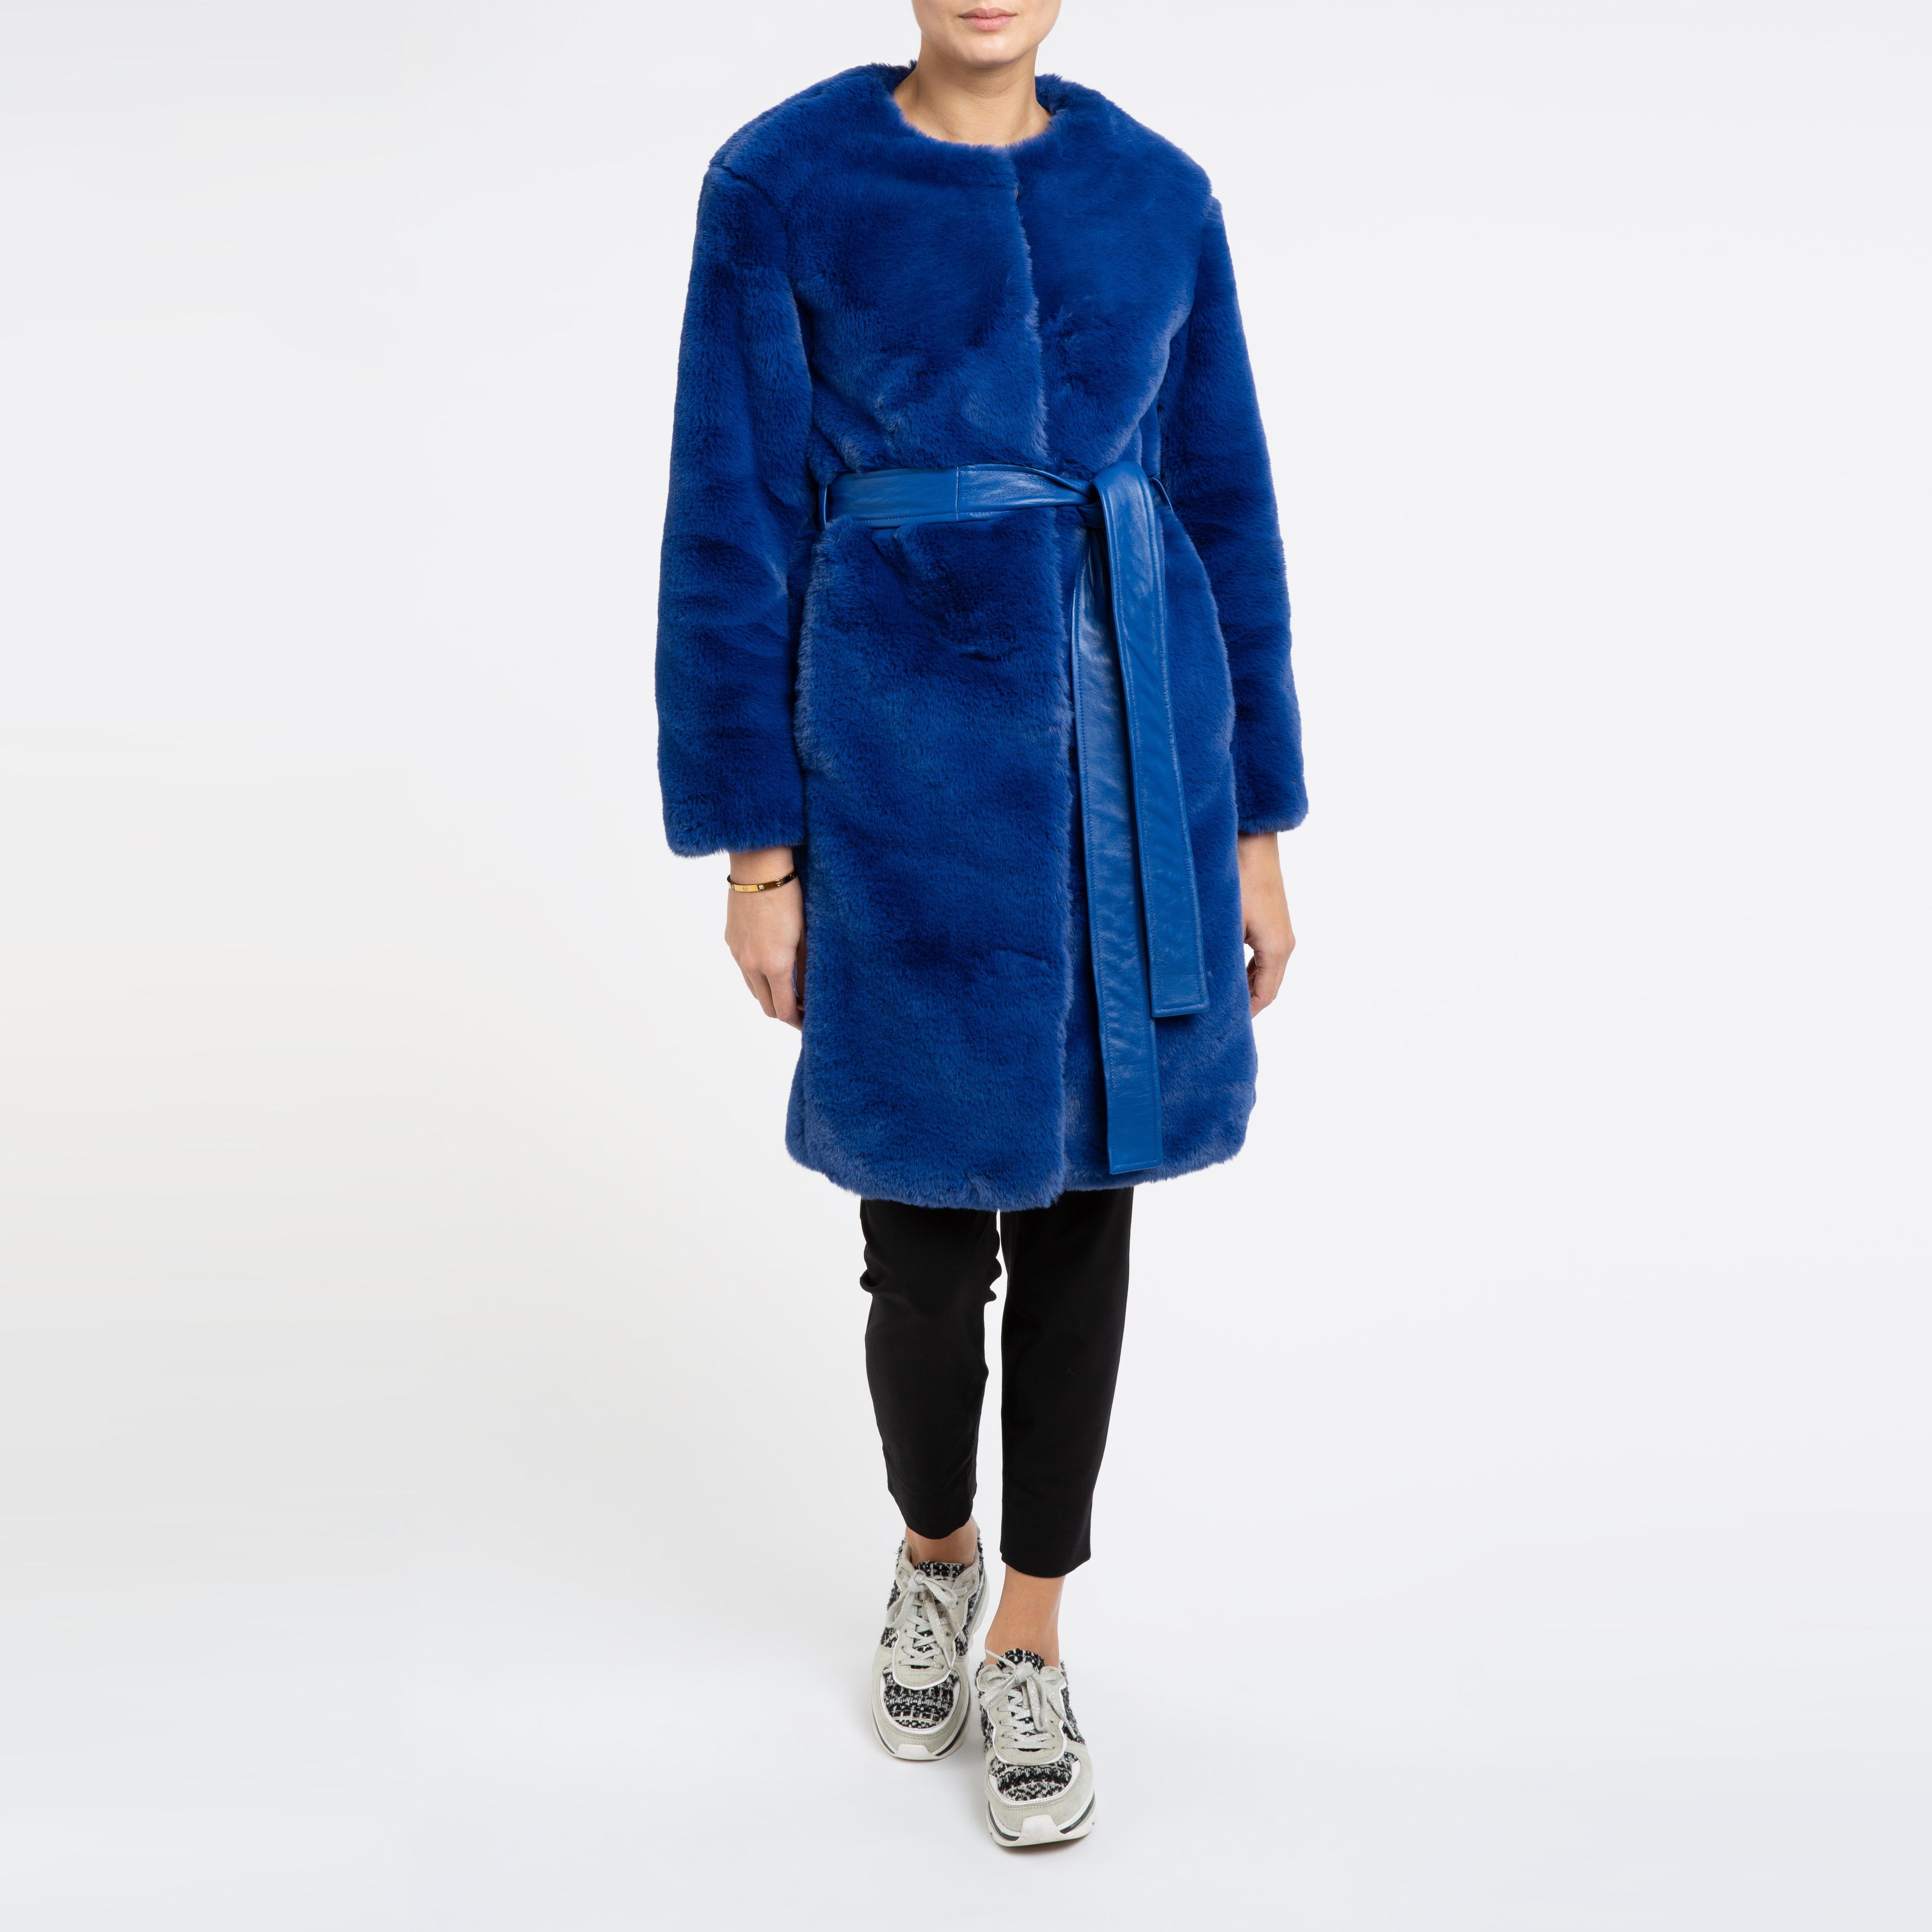 Verheyen London Serena  Collarless Faux Fur Coat in Blue - Size uk 14 For Sale 1